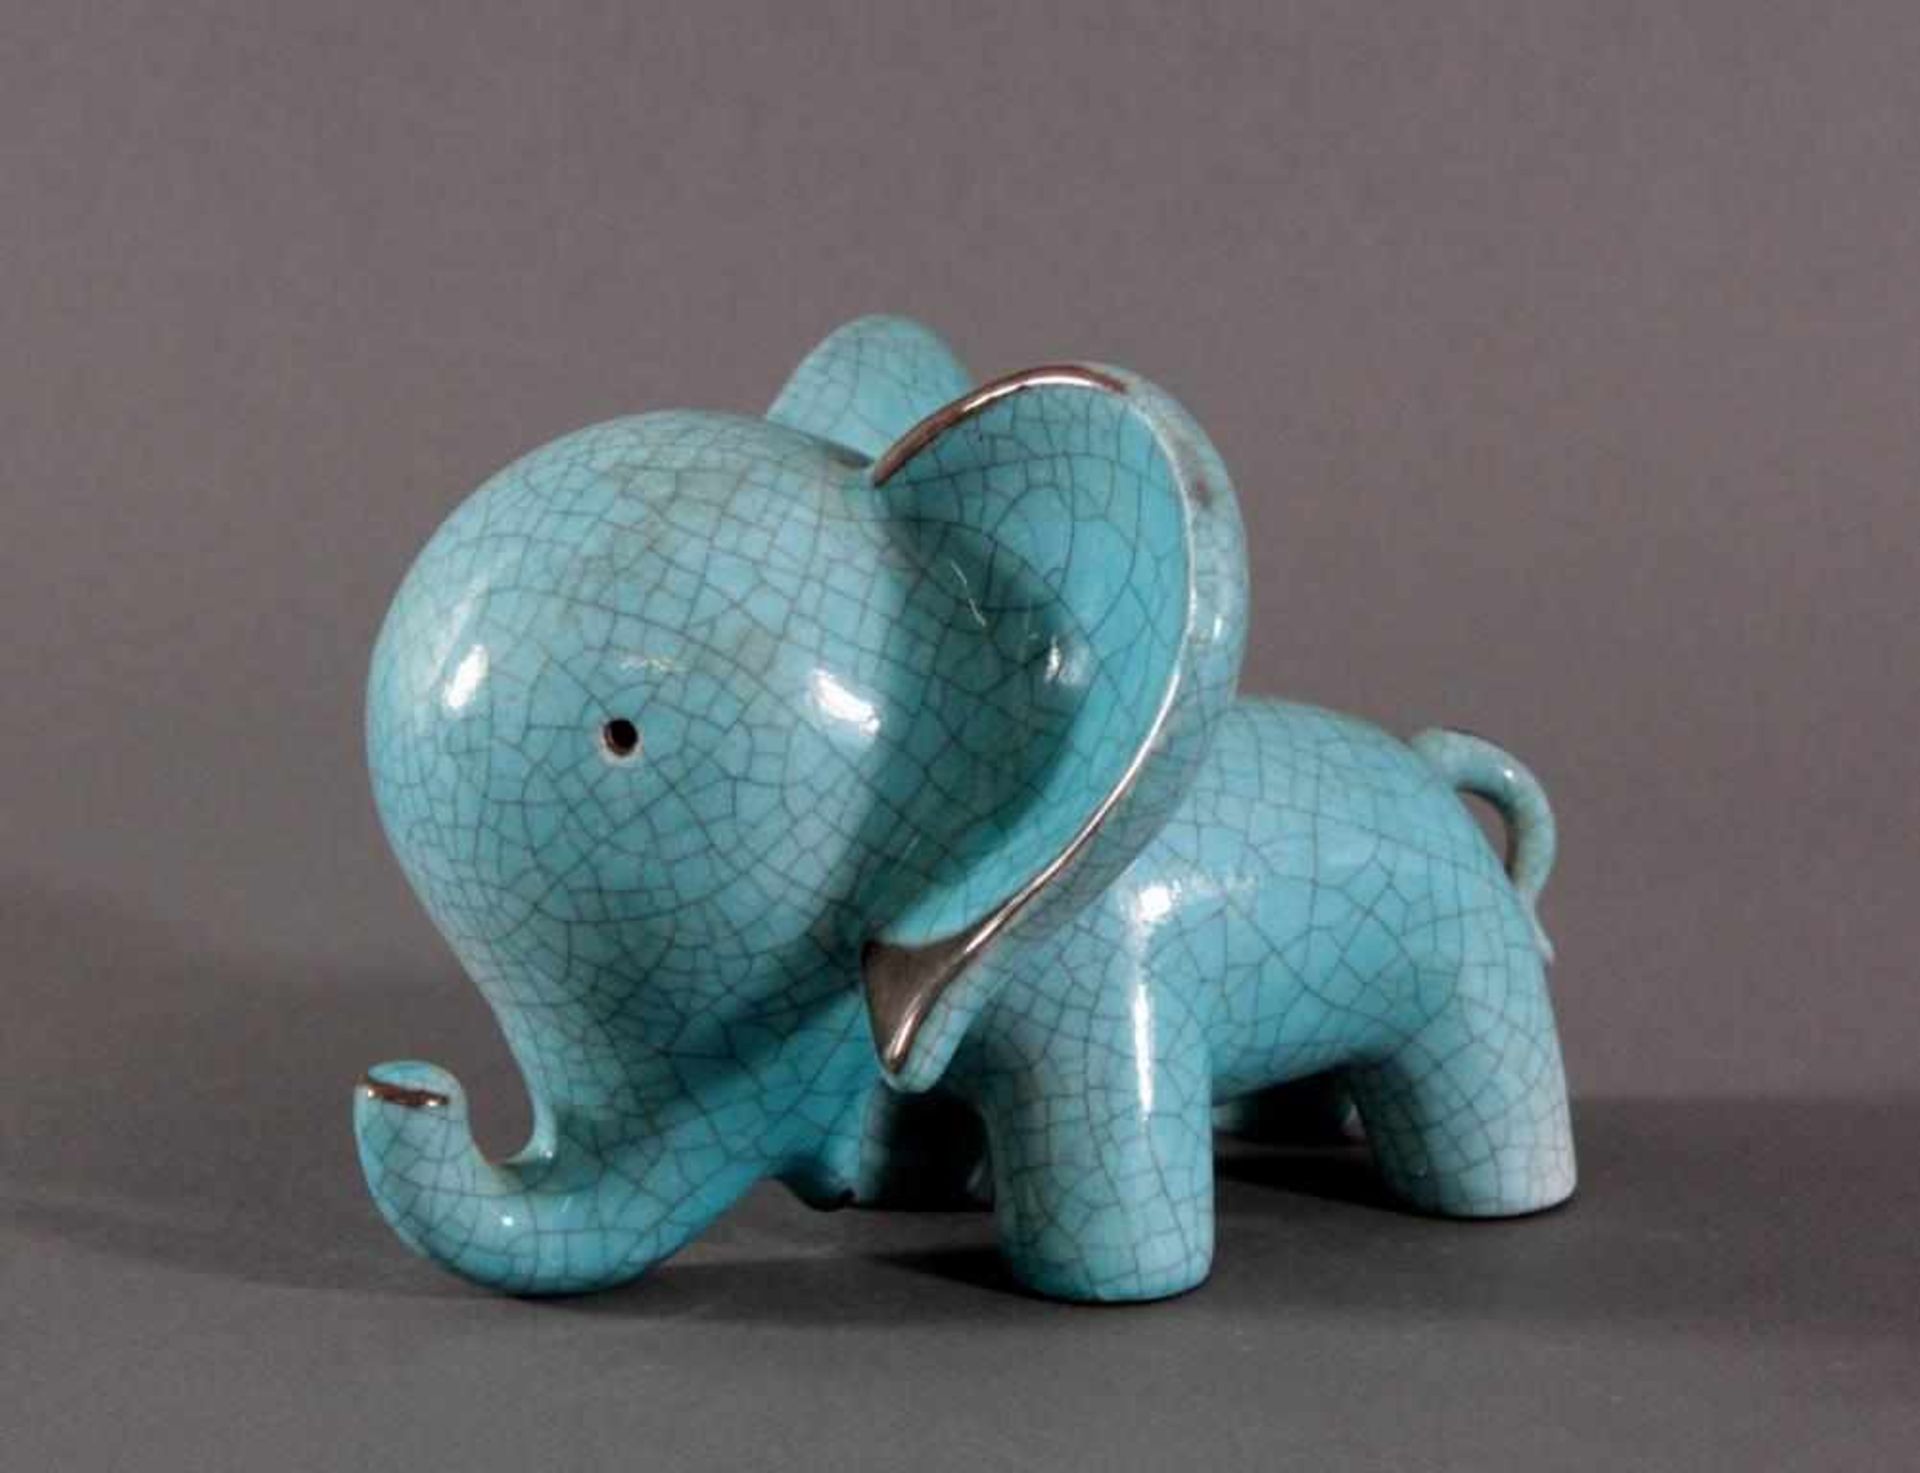 Keramik-Miniaturtierplastik, "Elefant", Karlsruher Majolika, um 1956-88, Entw.: Walter - Bild 2 aus 5